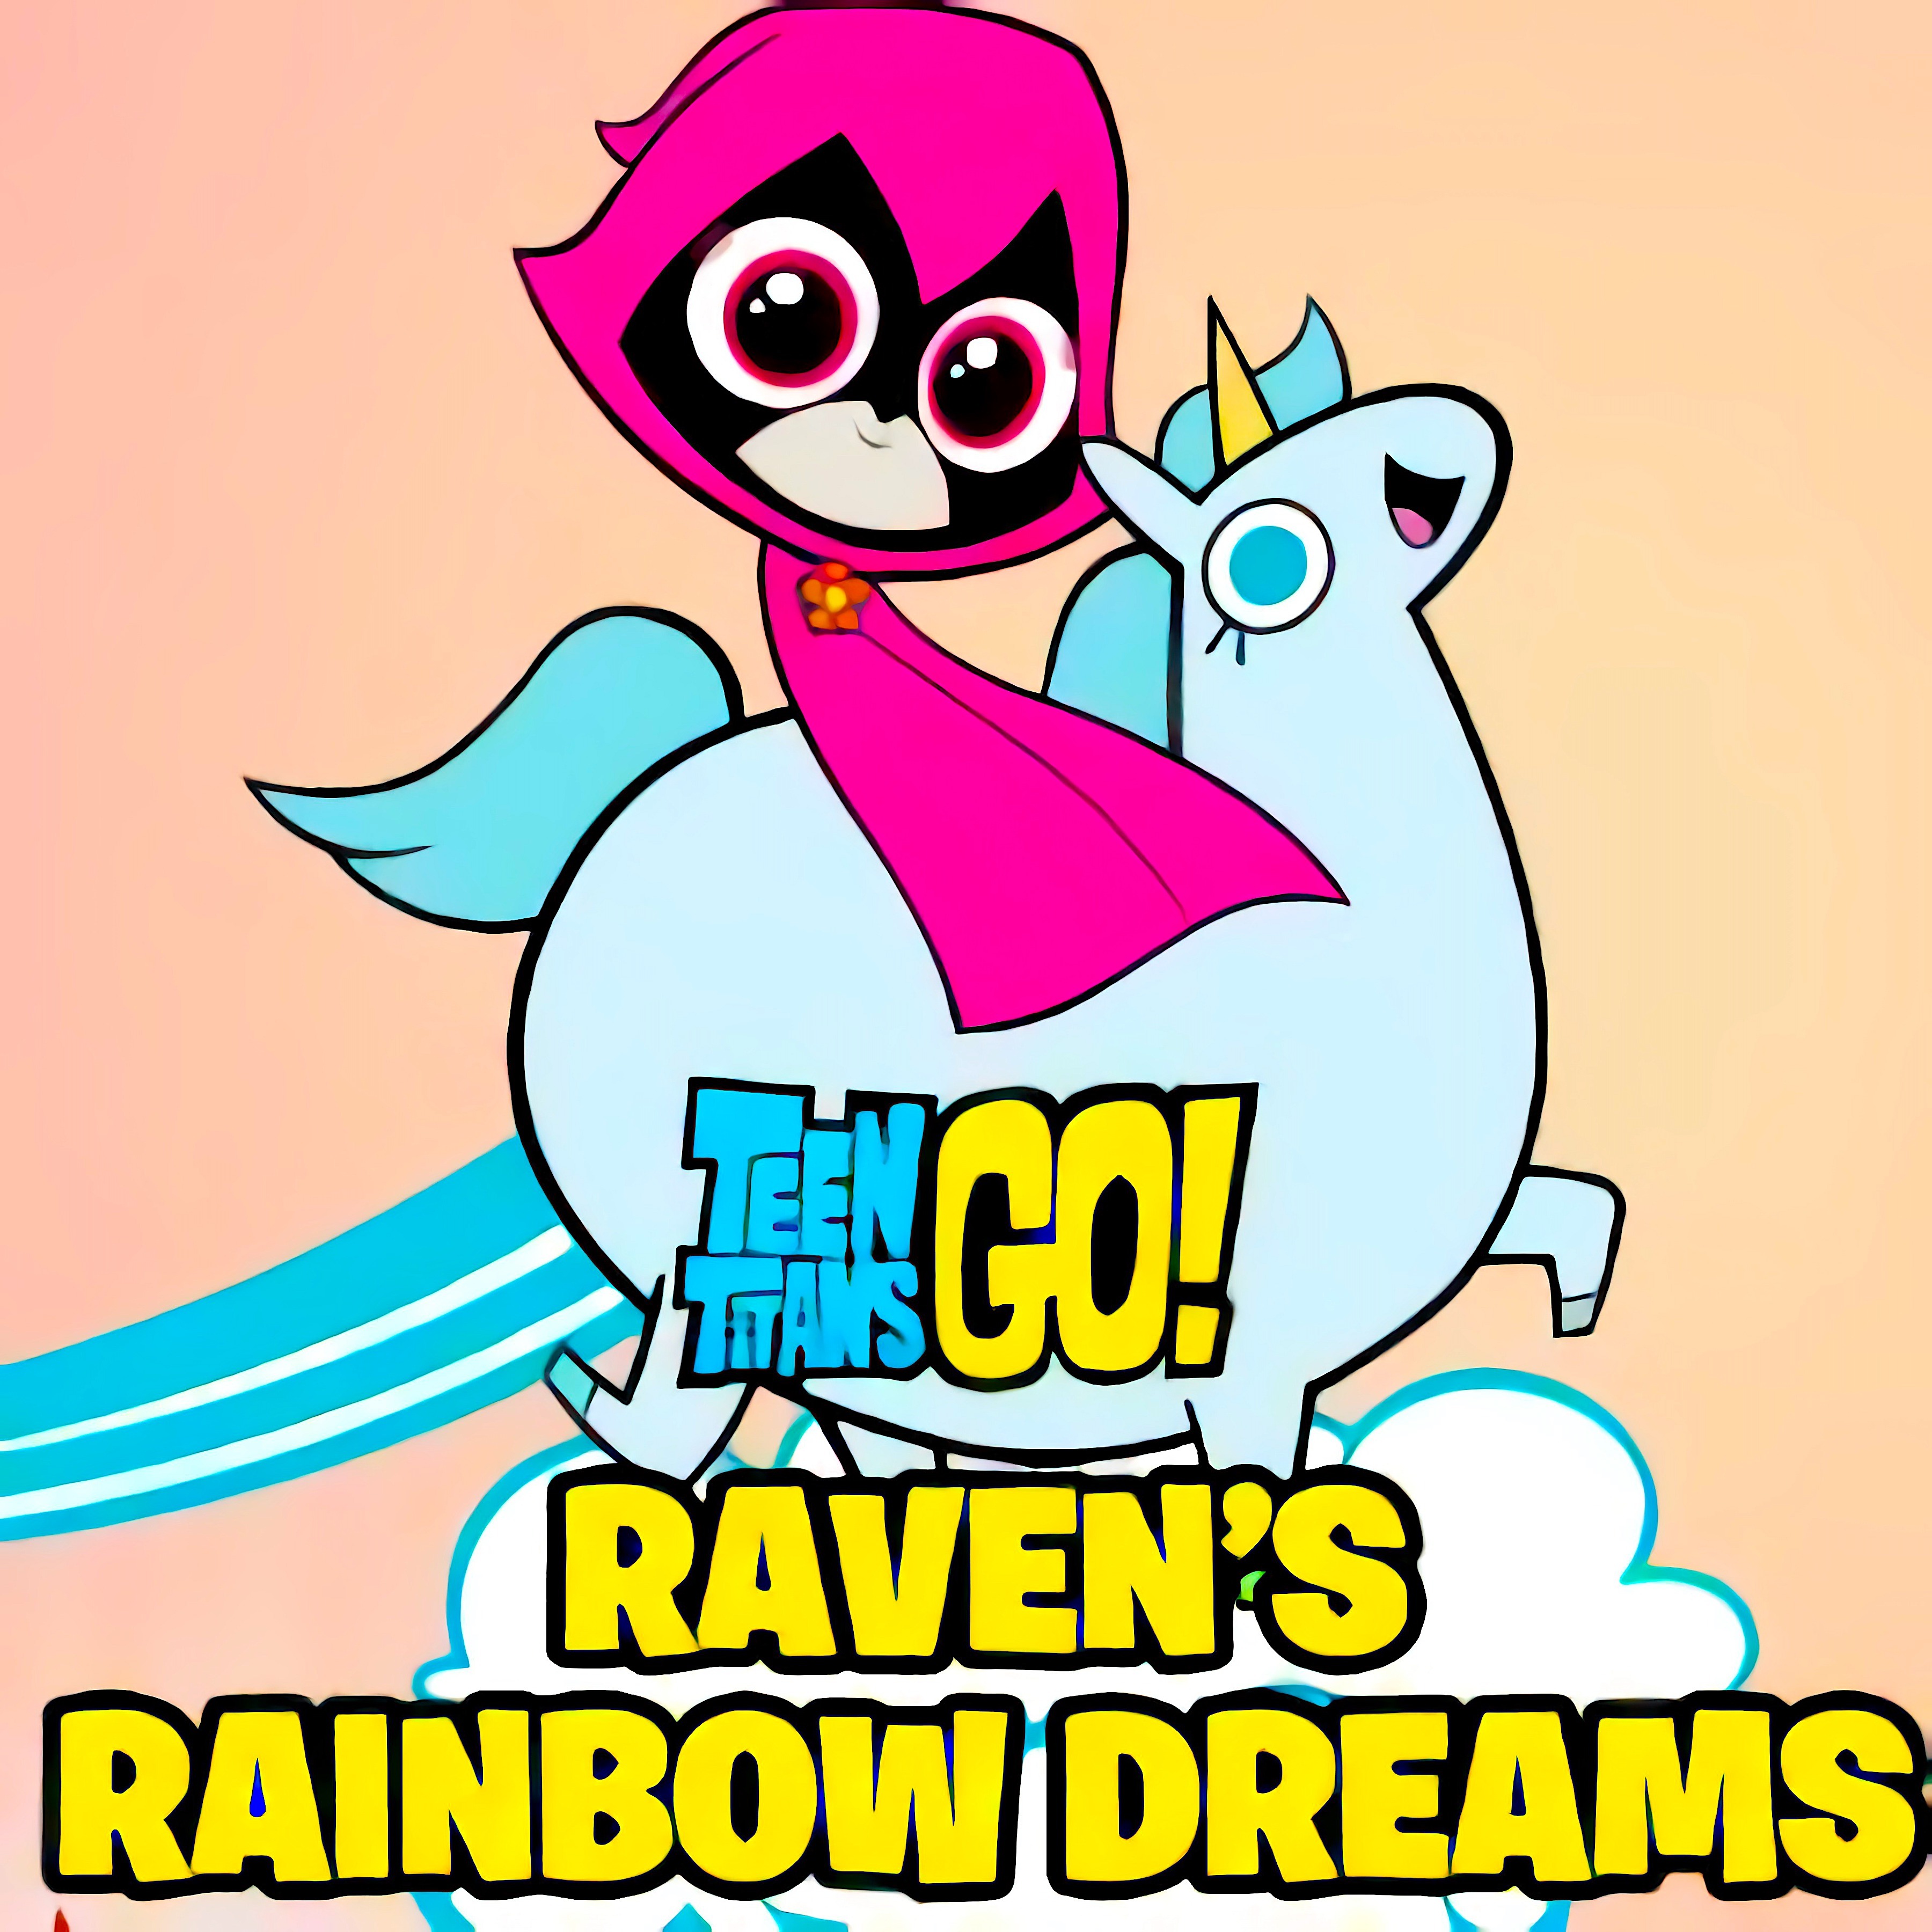 Ravens Rainbow Dreams